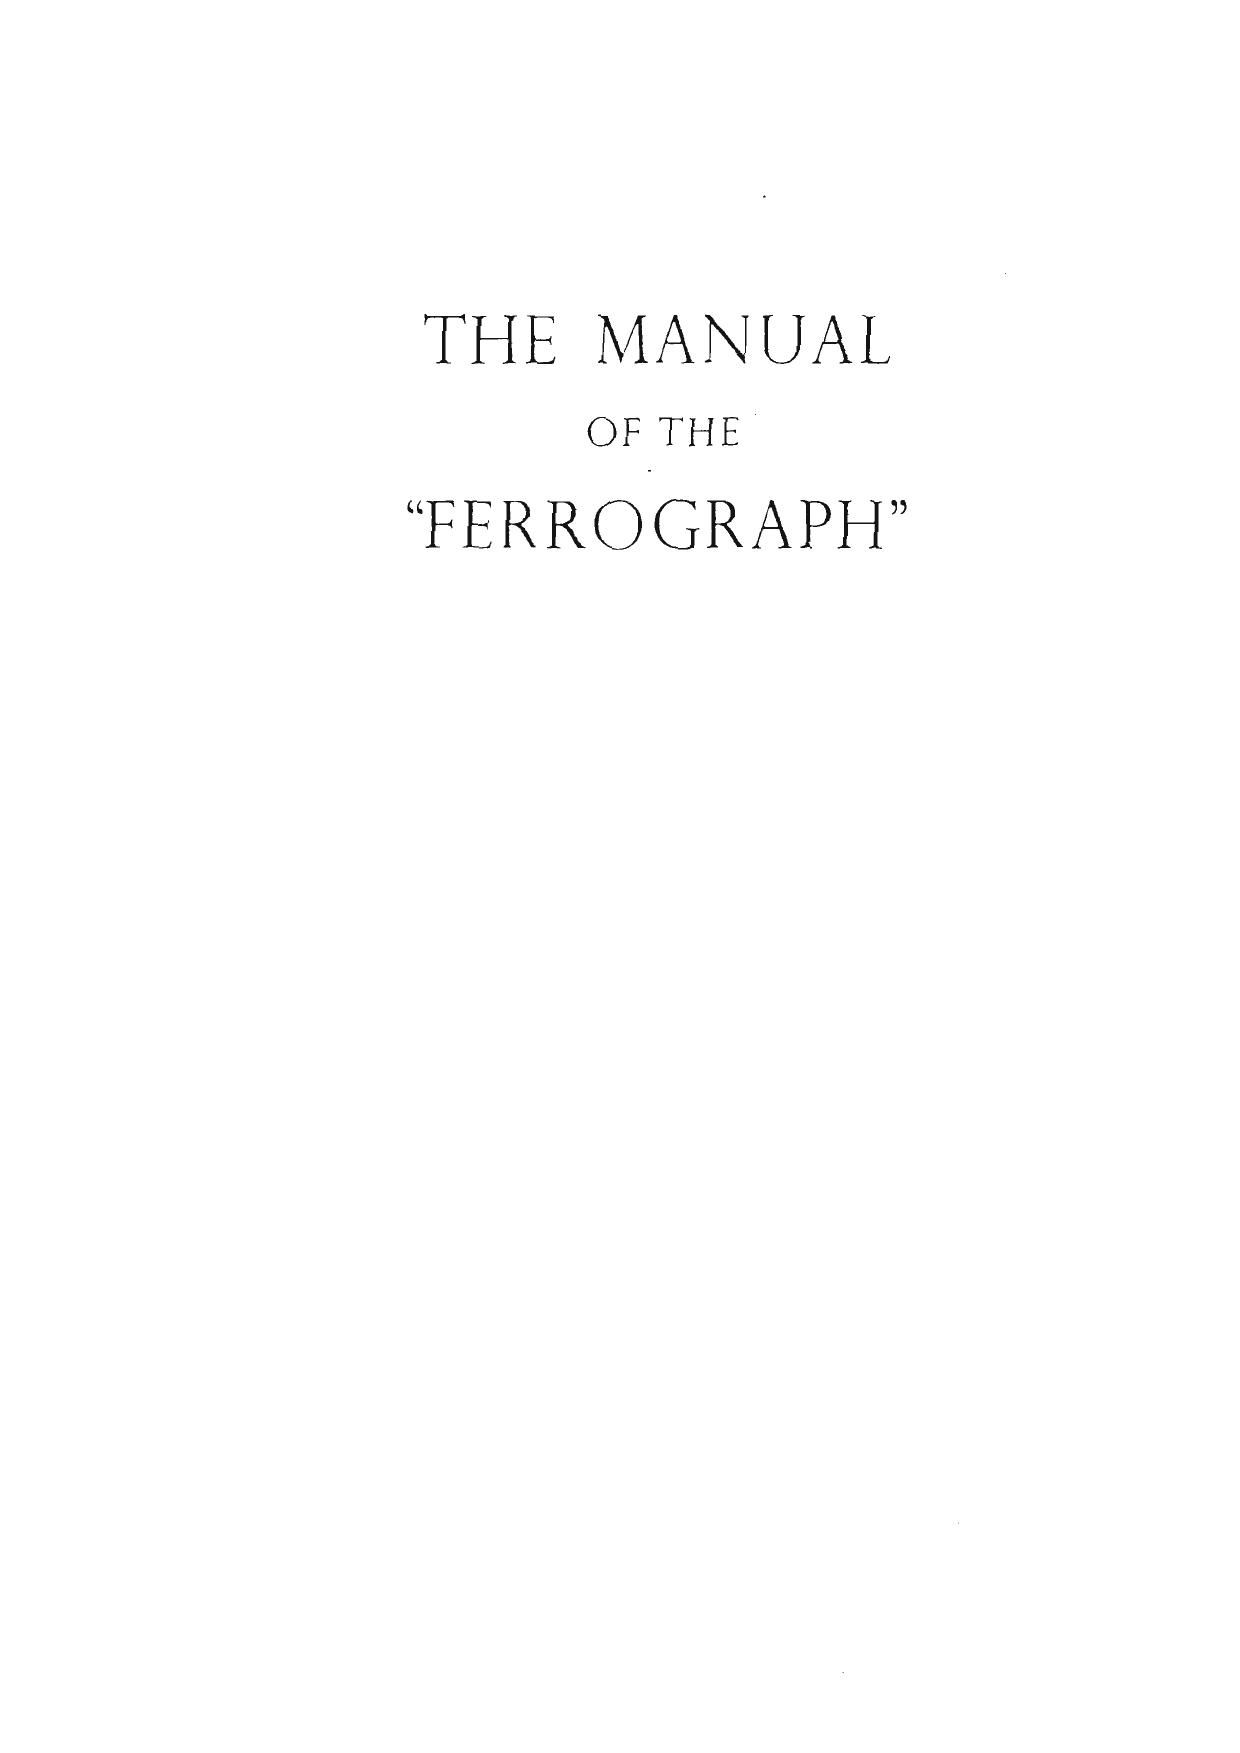 Ferrograph 4 AH Owners Manual